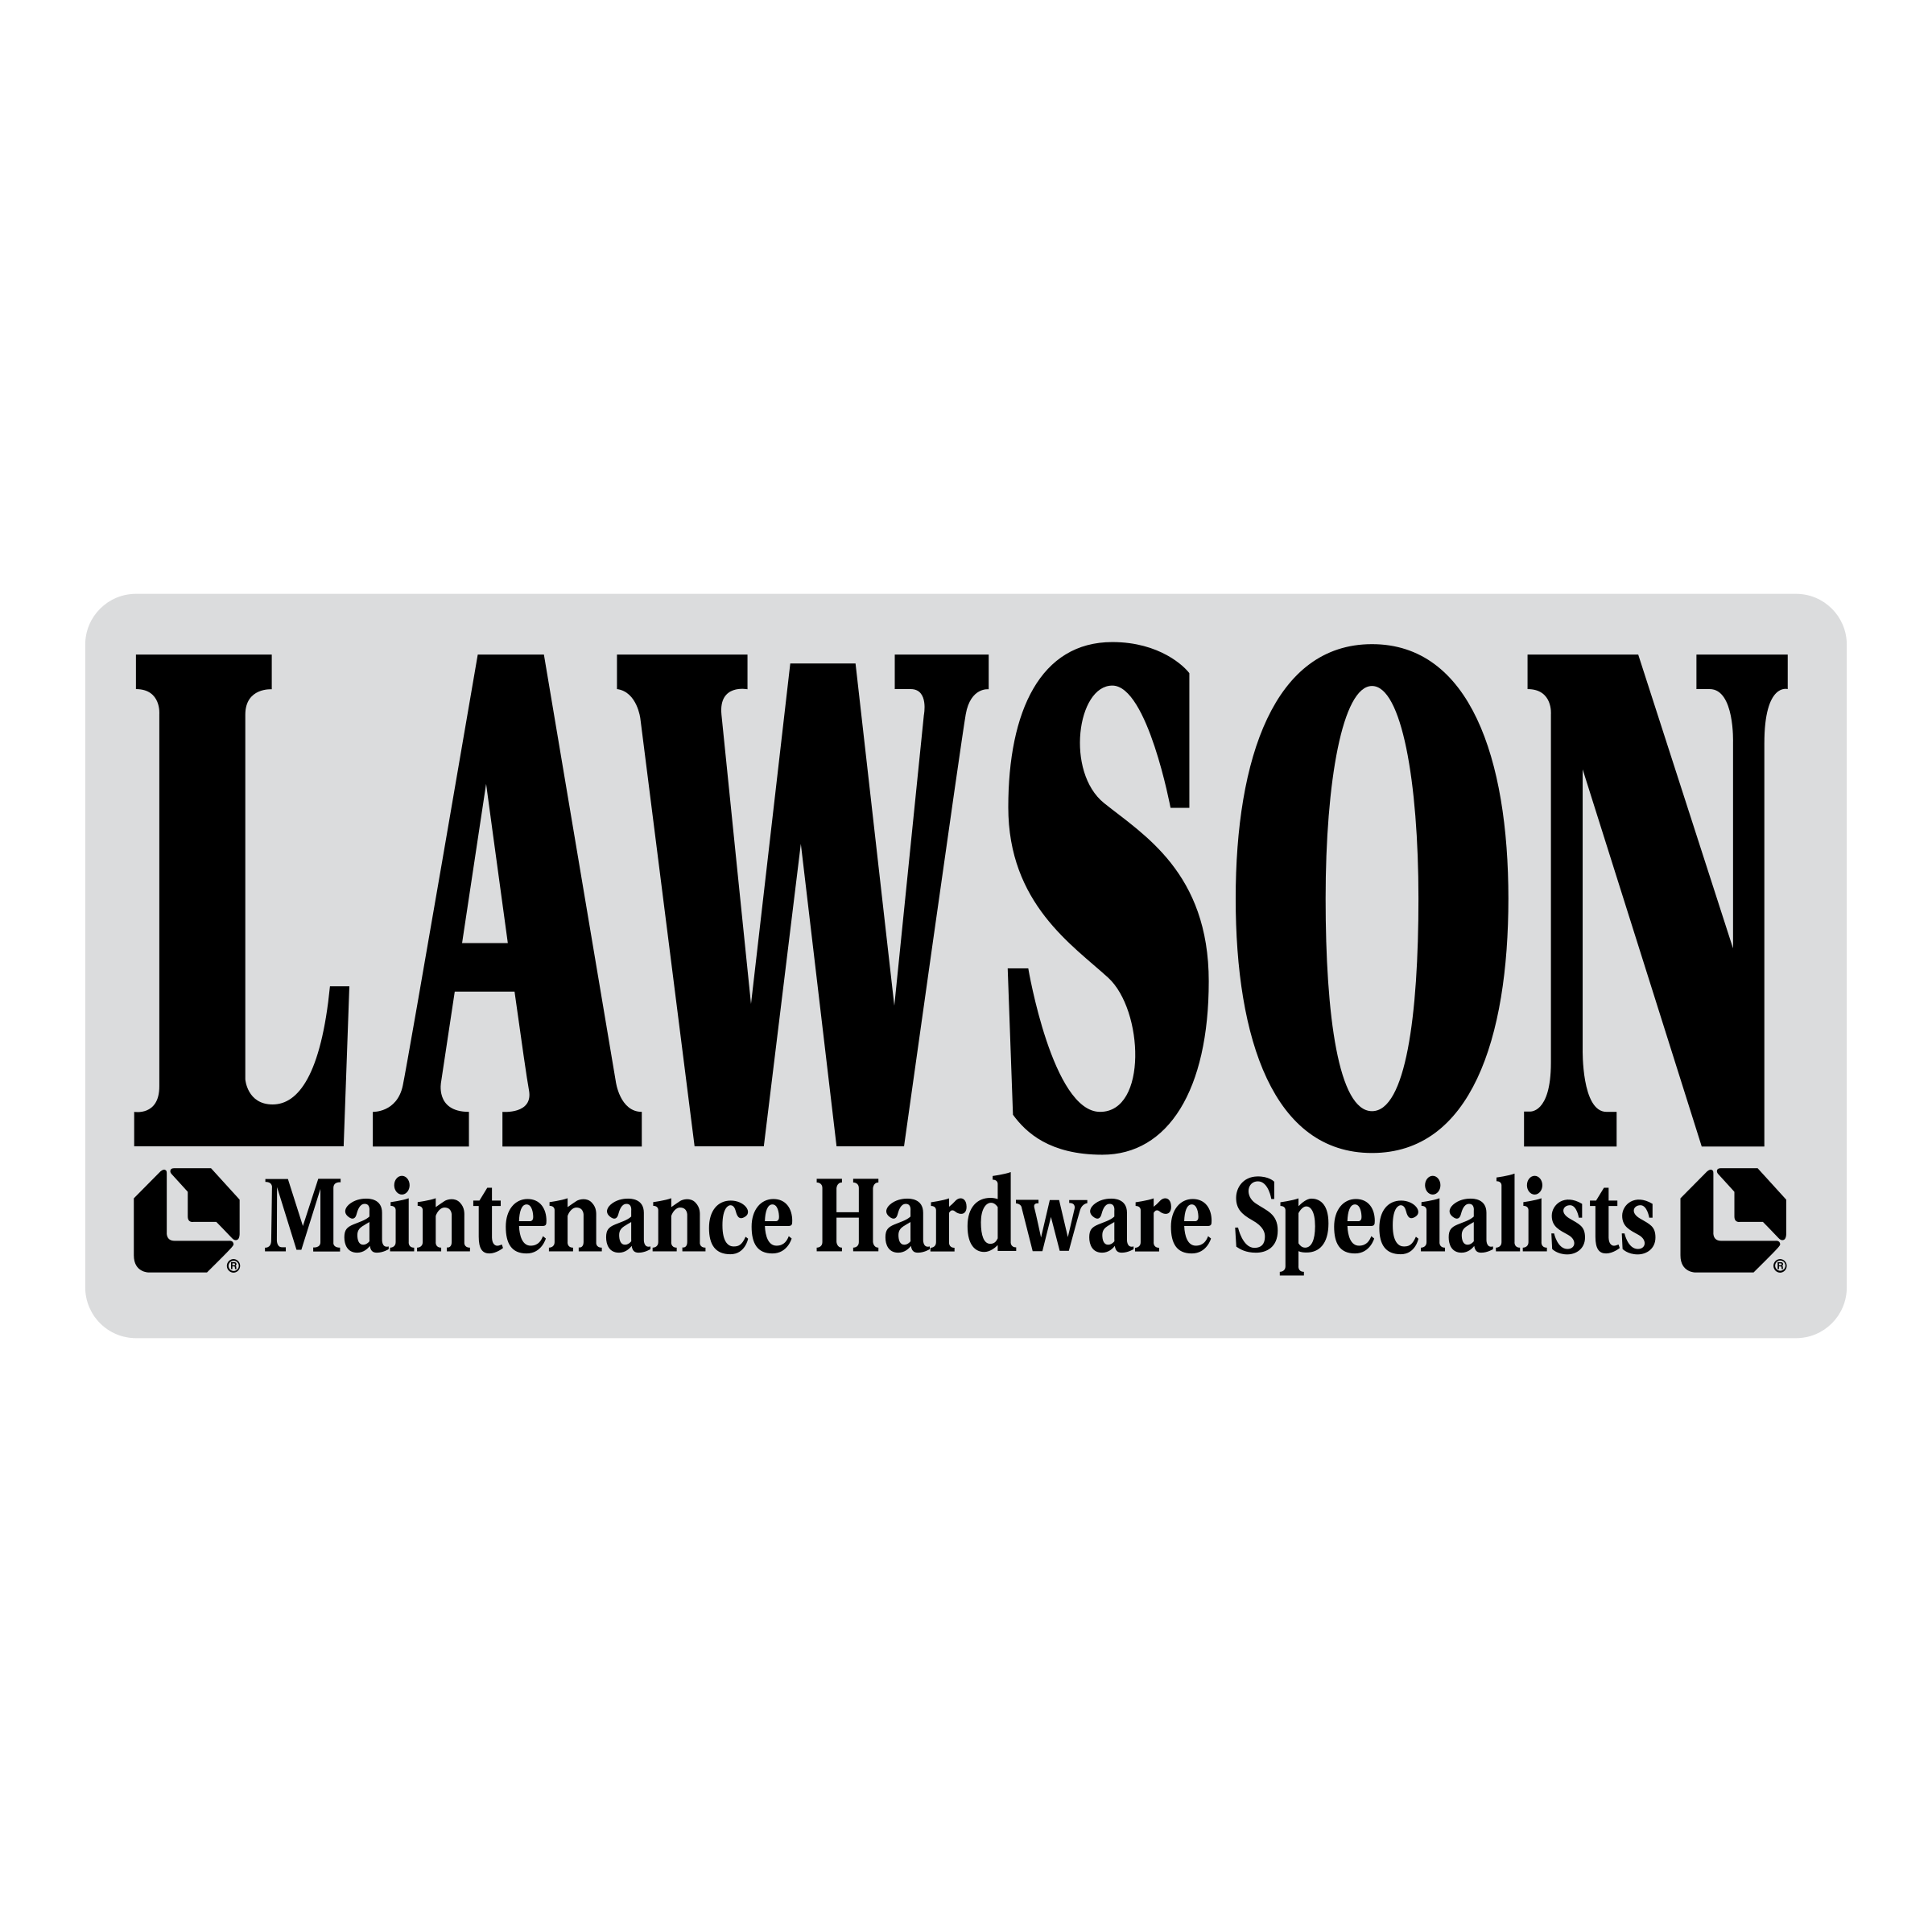 Lawson Logo - Lawson Logo PNG Transparent & SVG Vector - Freebie Supply